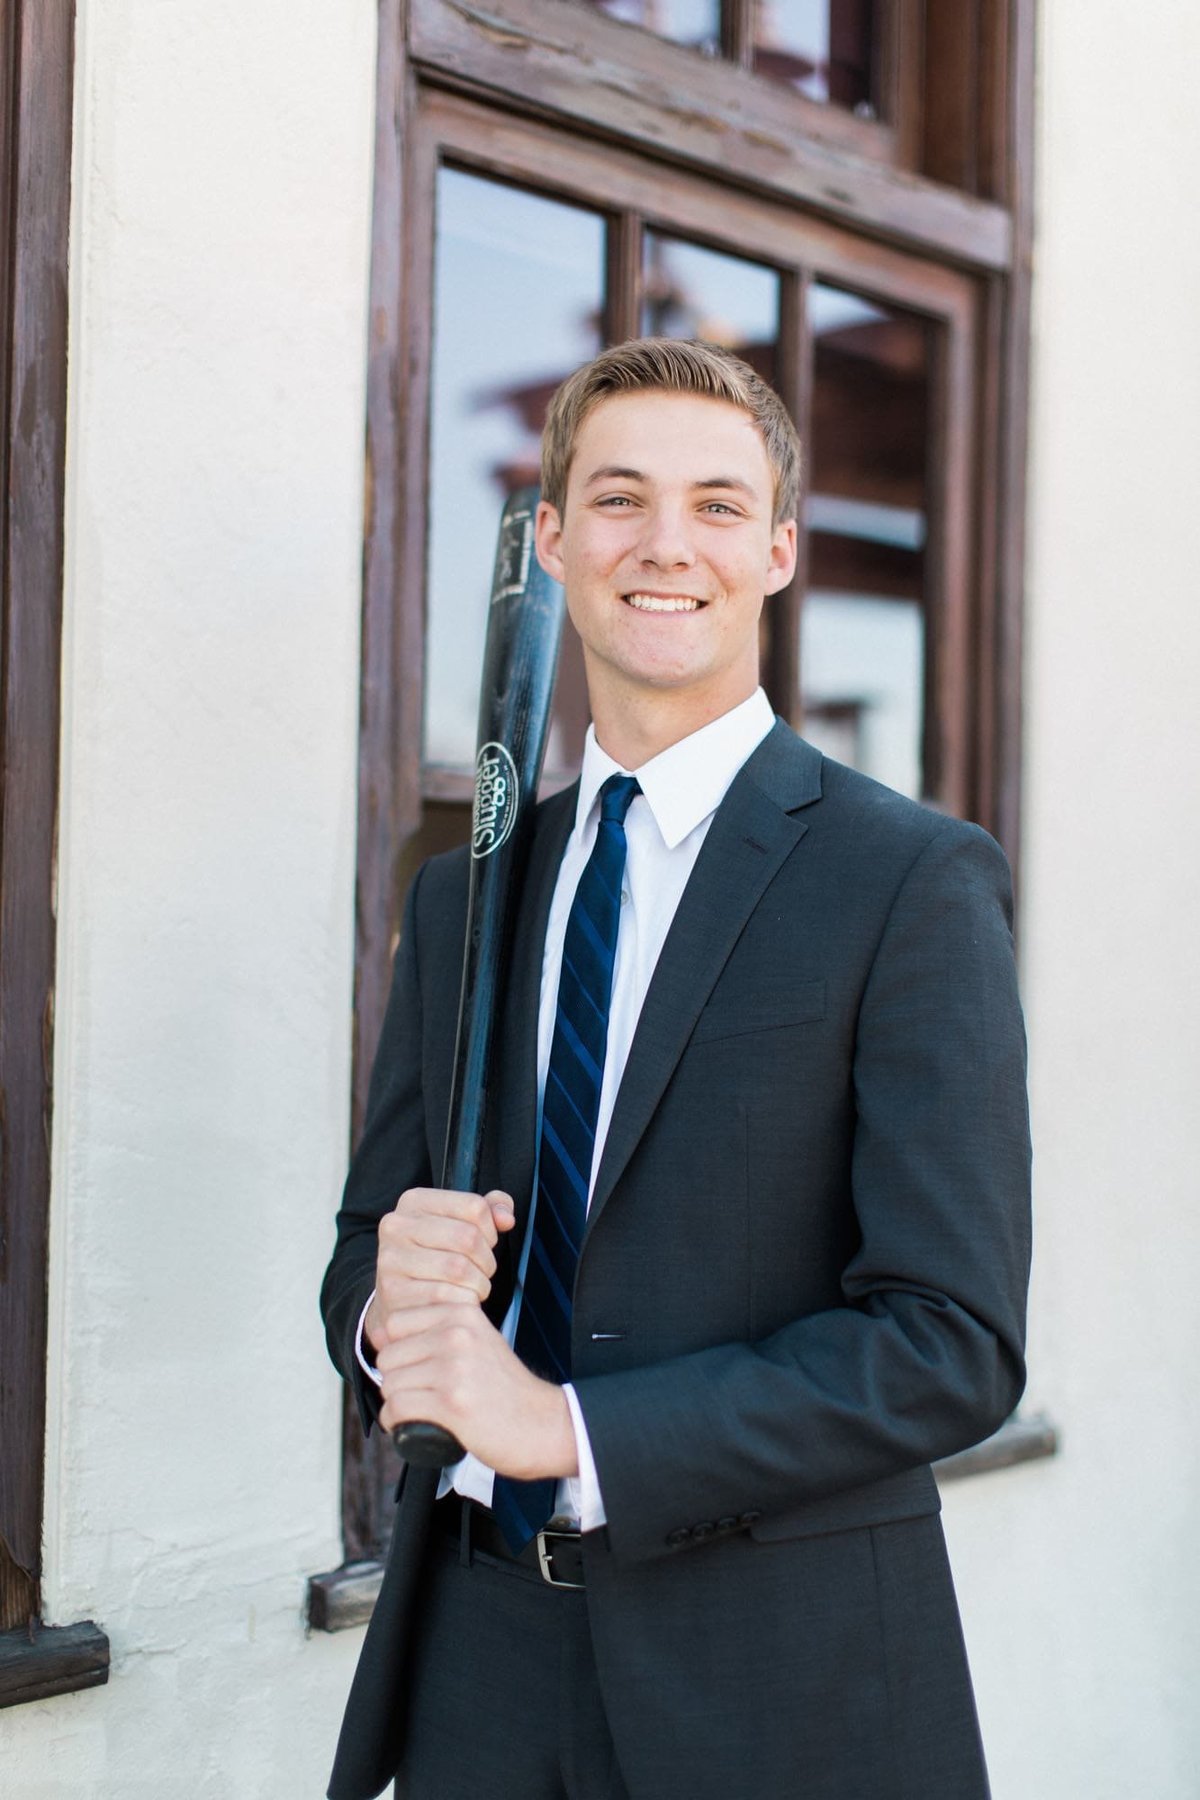 Young man posing with a baseball bat during his senior photos session